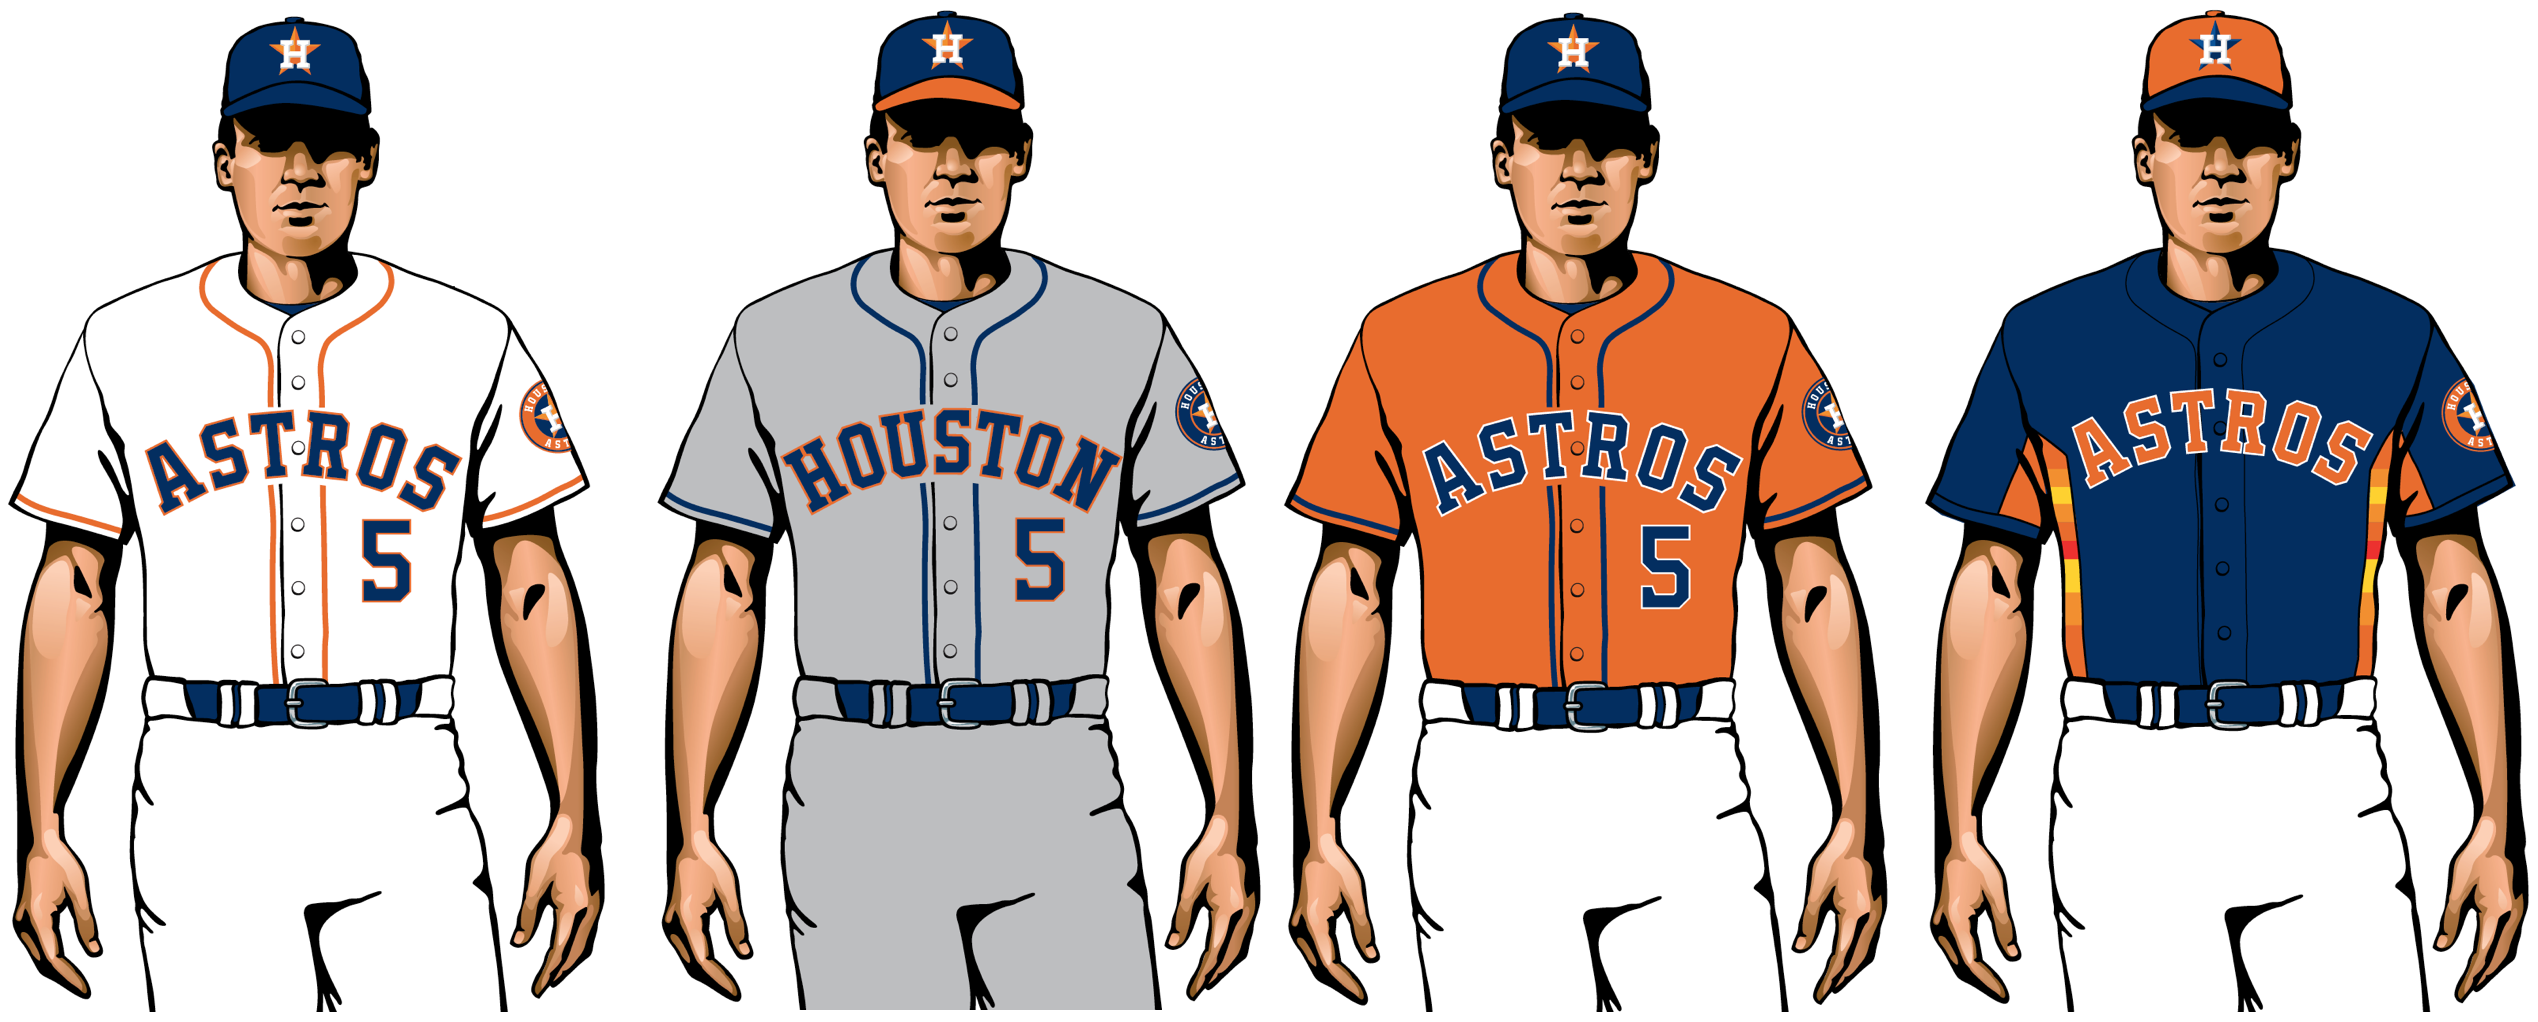 astros new uniforms 2020